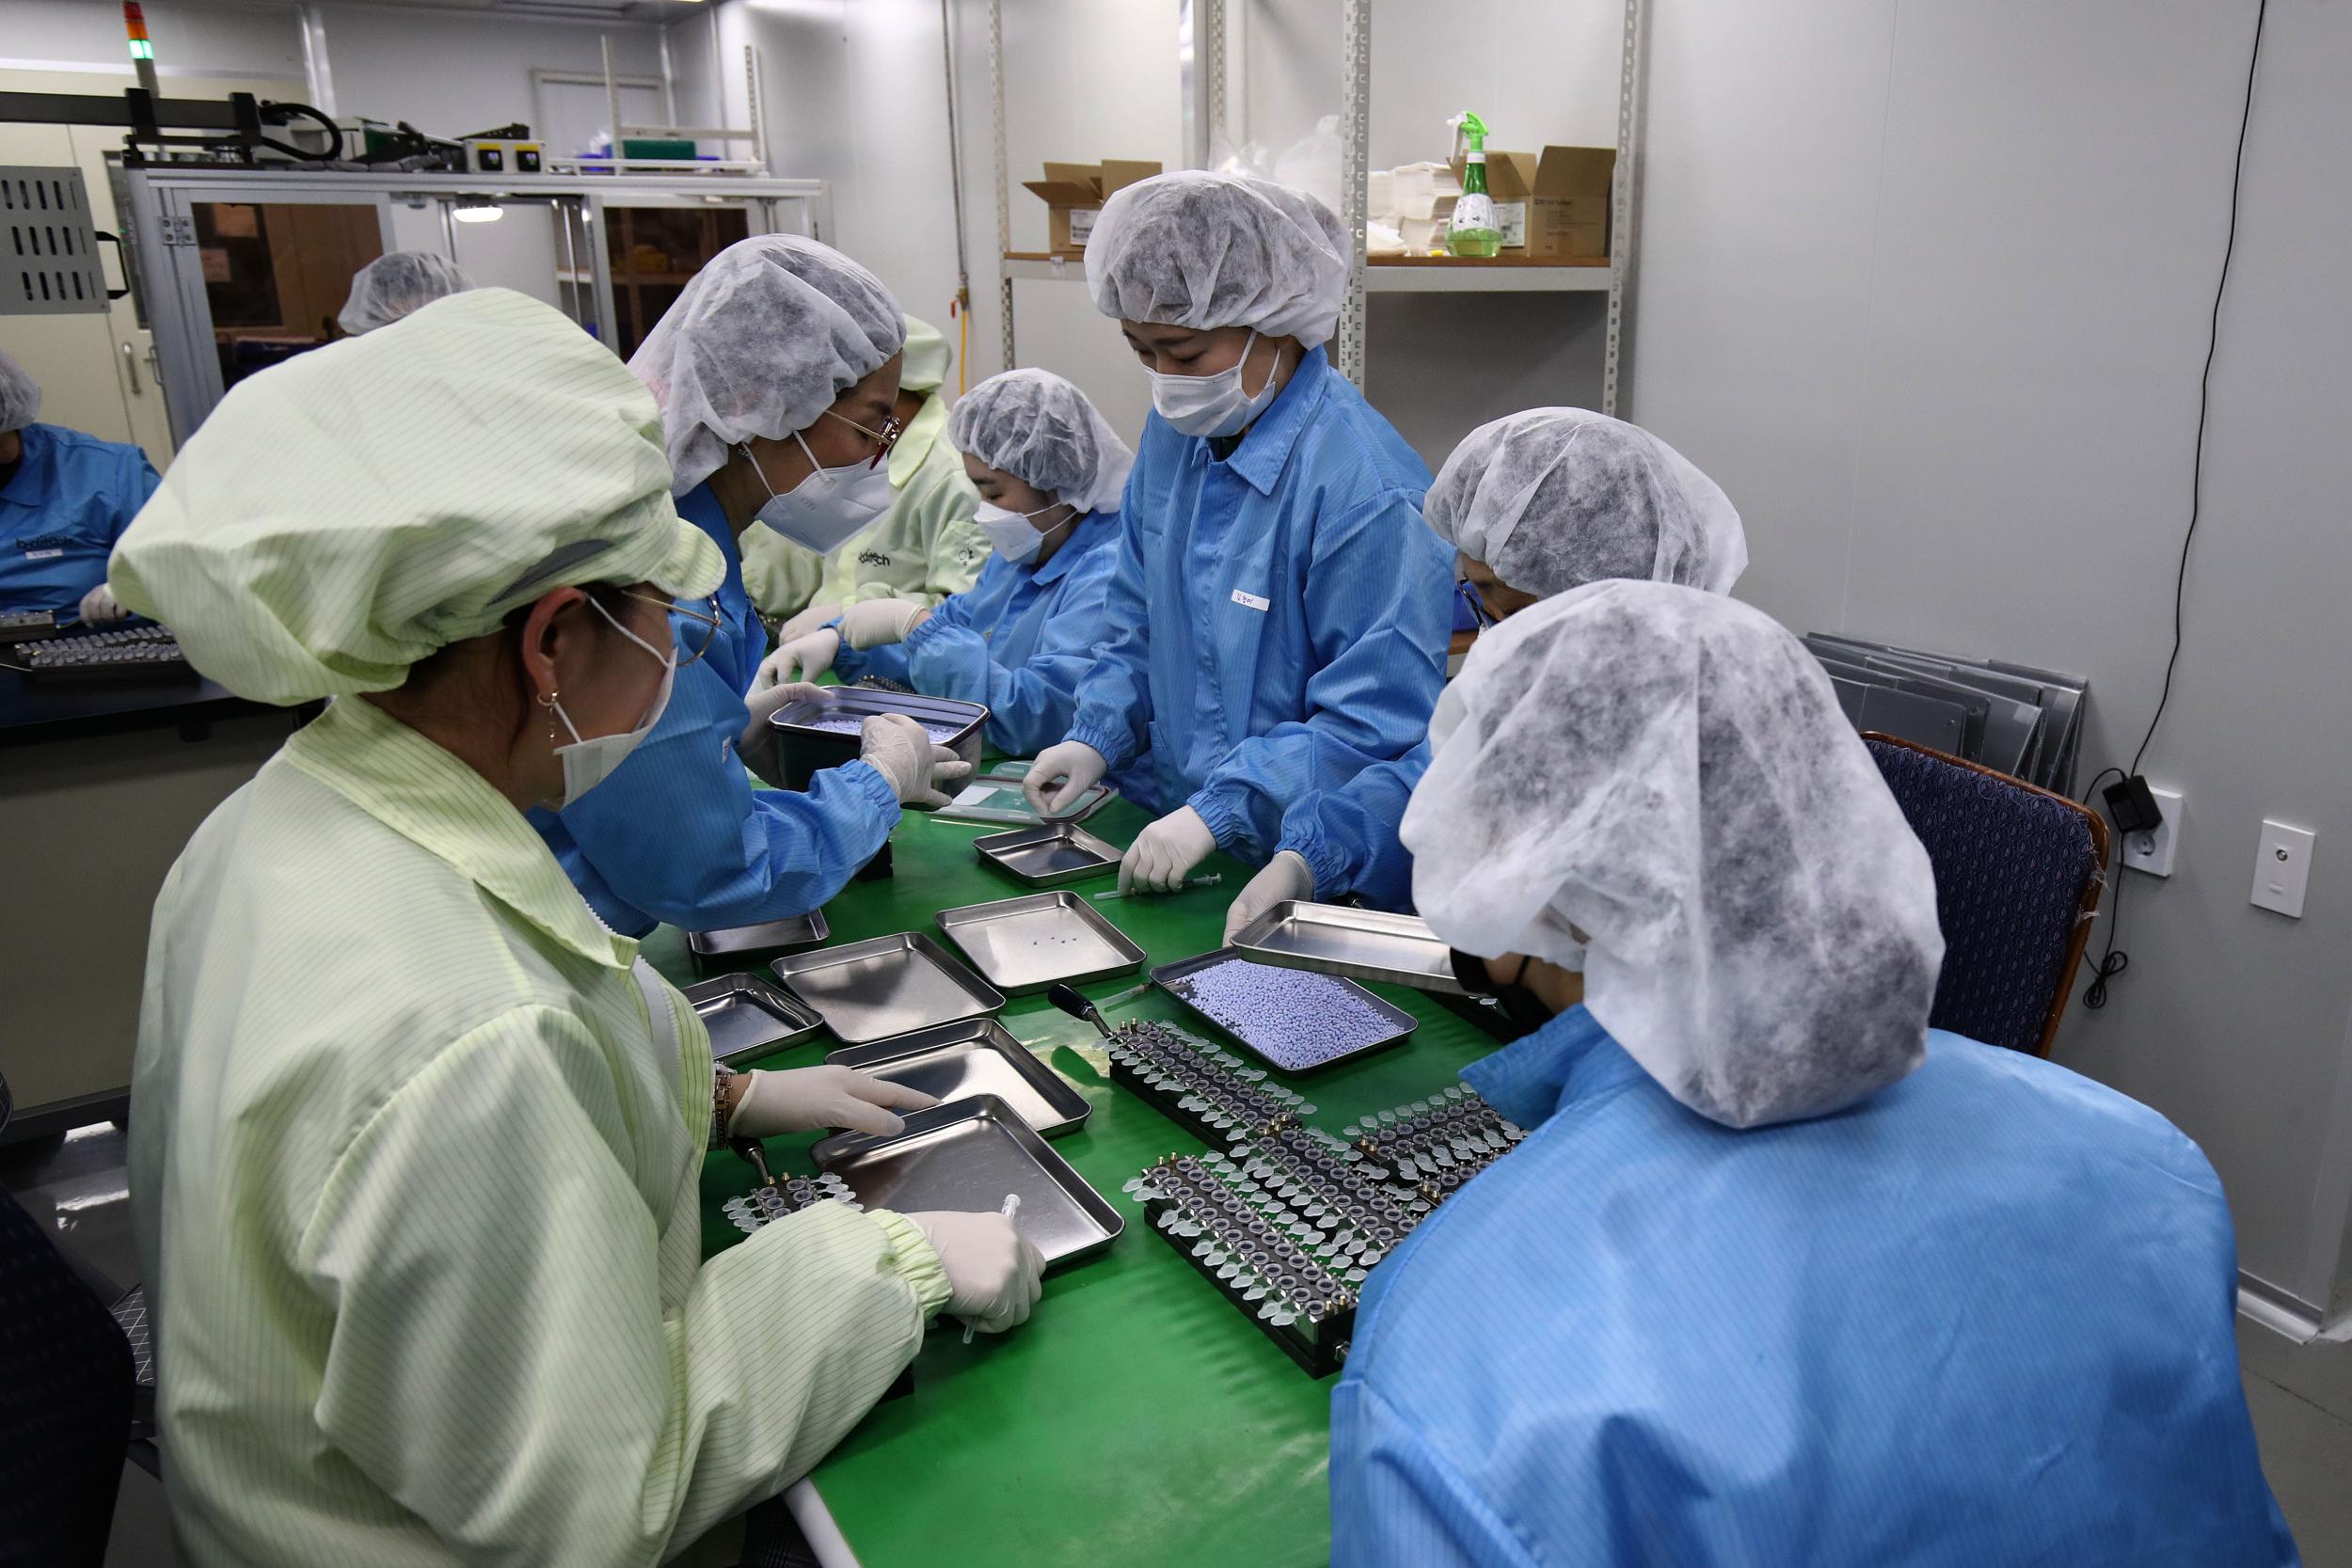 South Korea has ramped up its production of coronavirus test kits